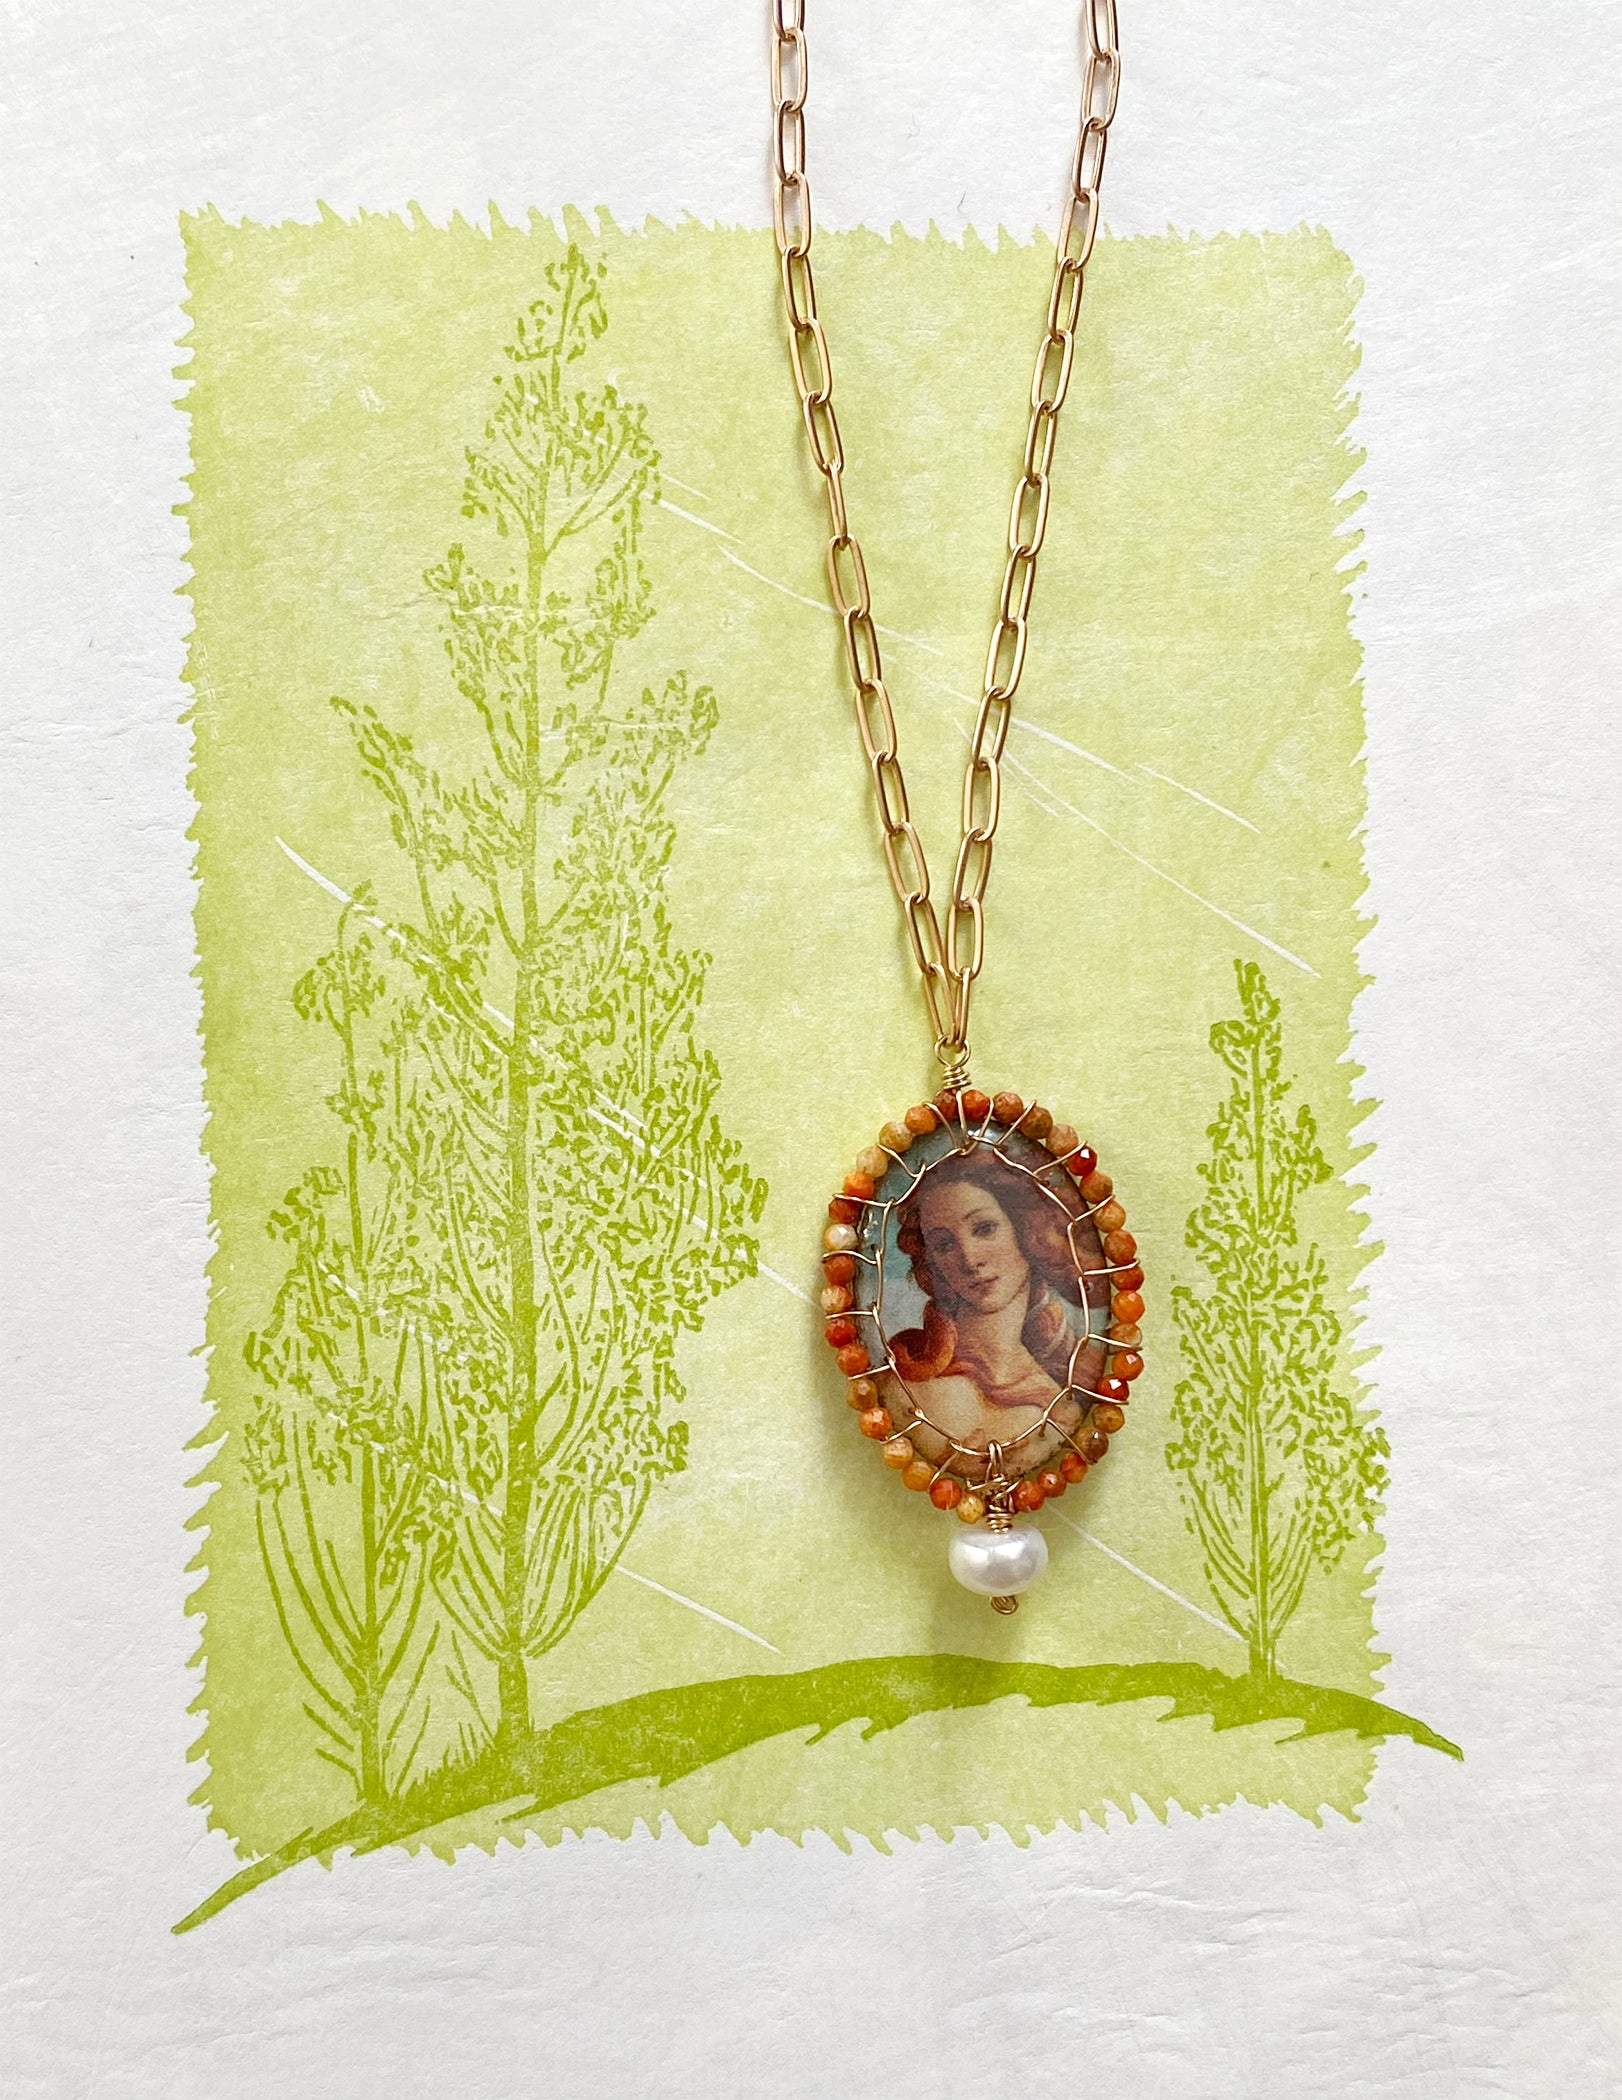 Stitched Victoria Necklace | Birth of Venus